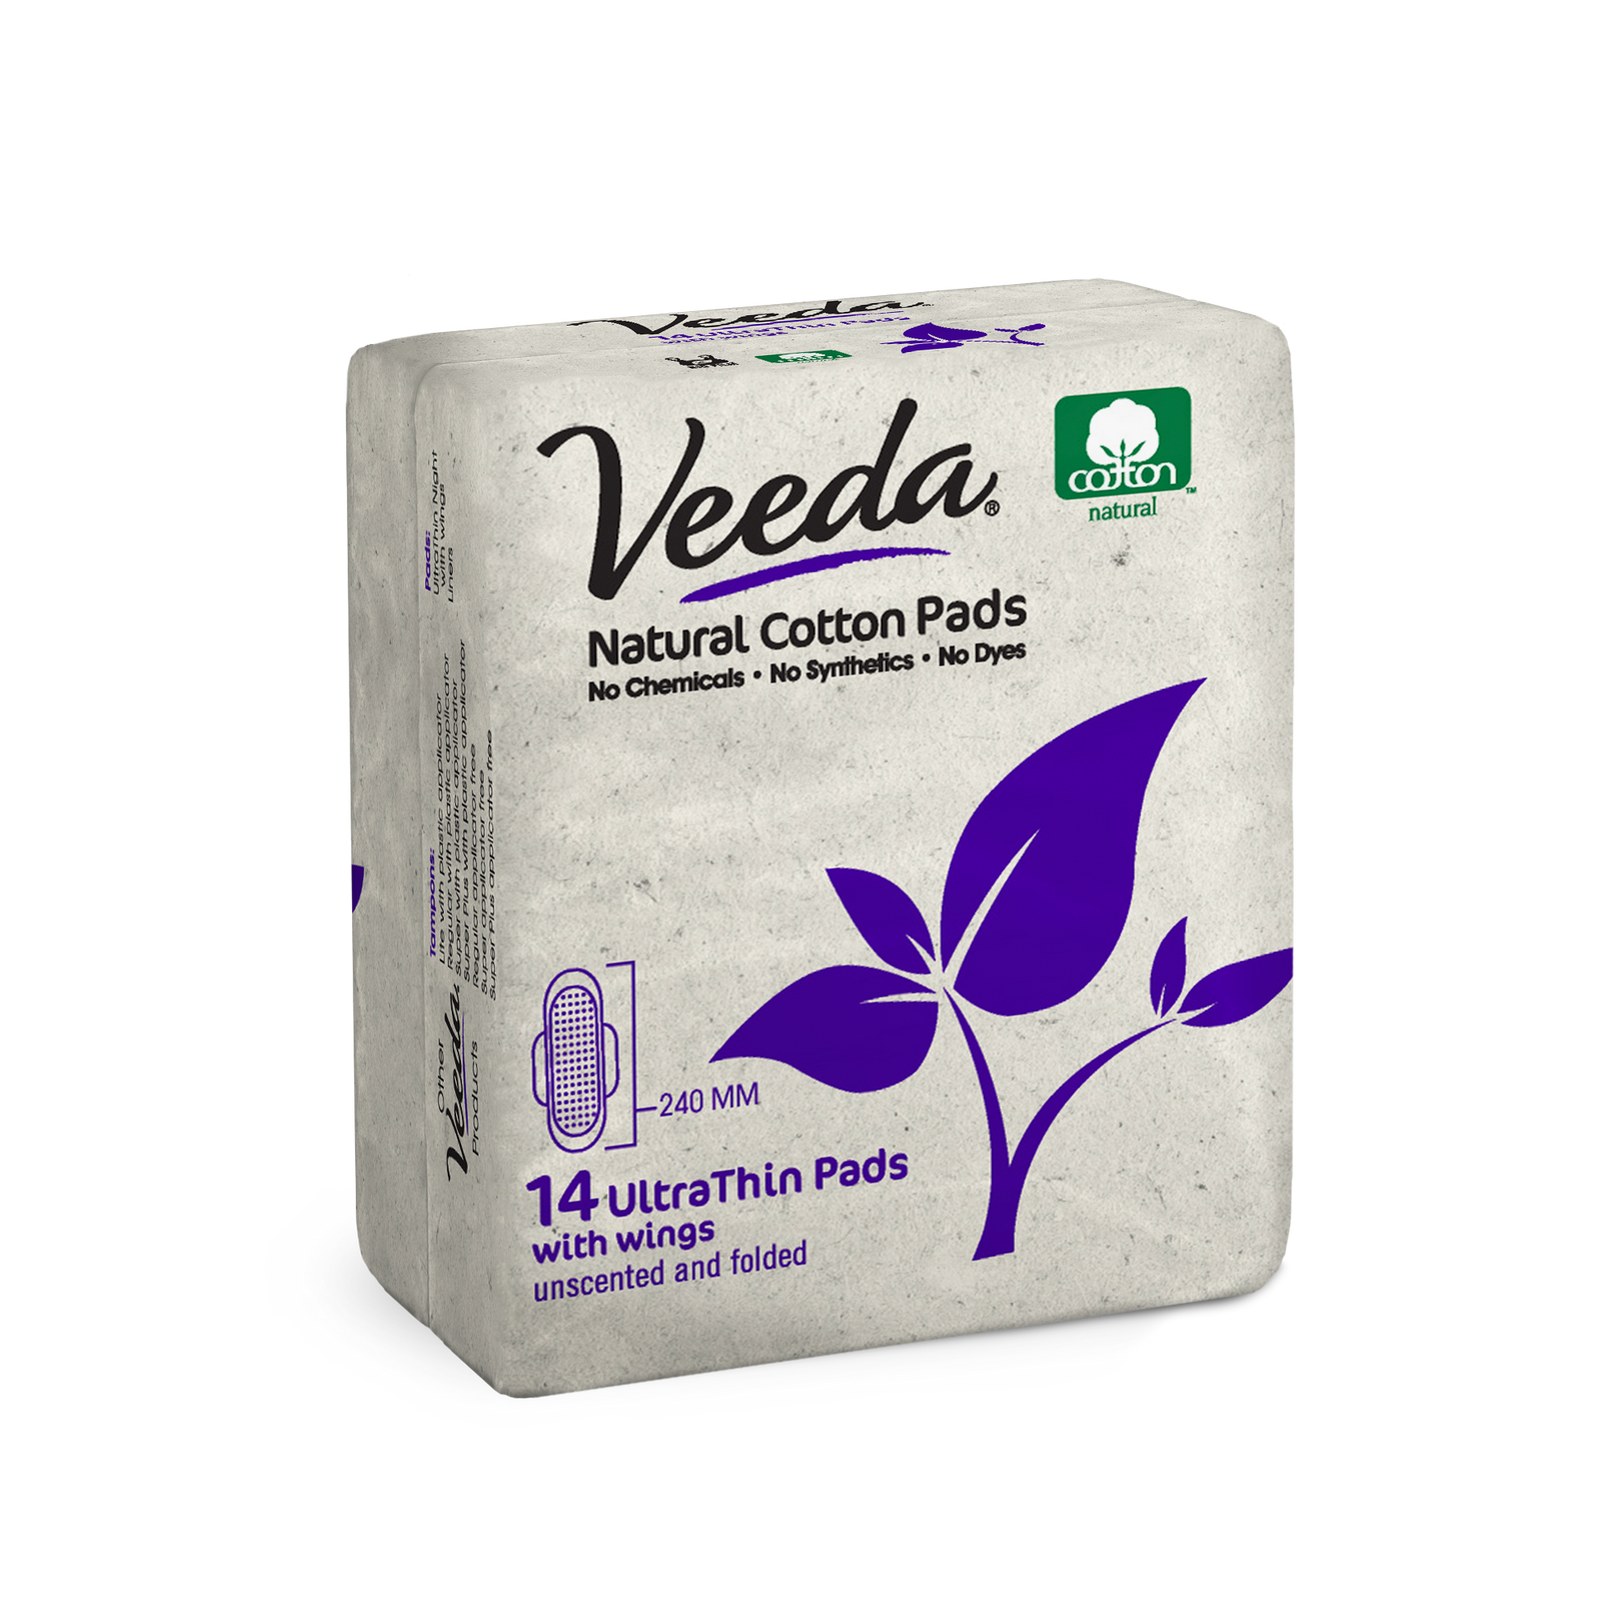 Veeda Ultra Thin Super Absorbent Night Pads are Always Chlorine